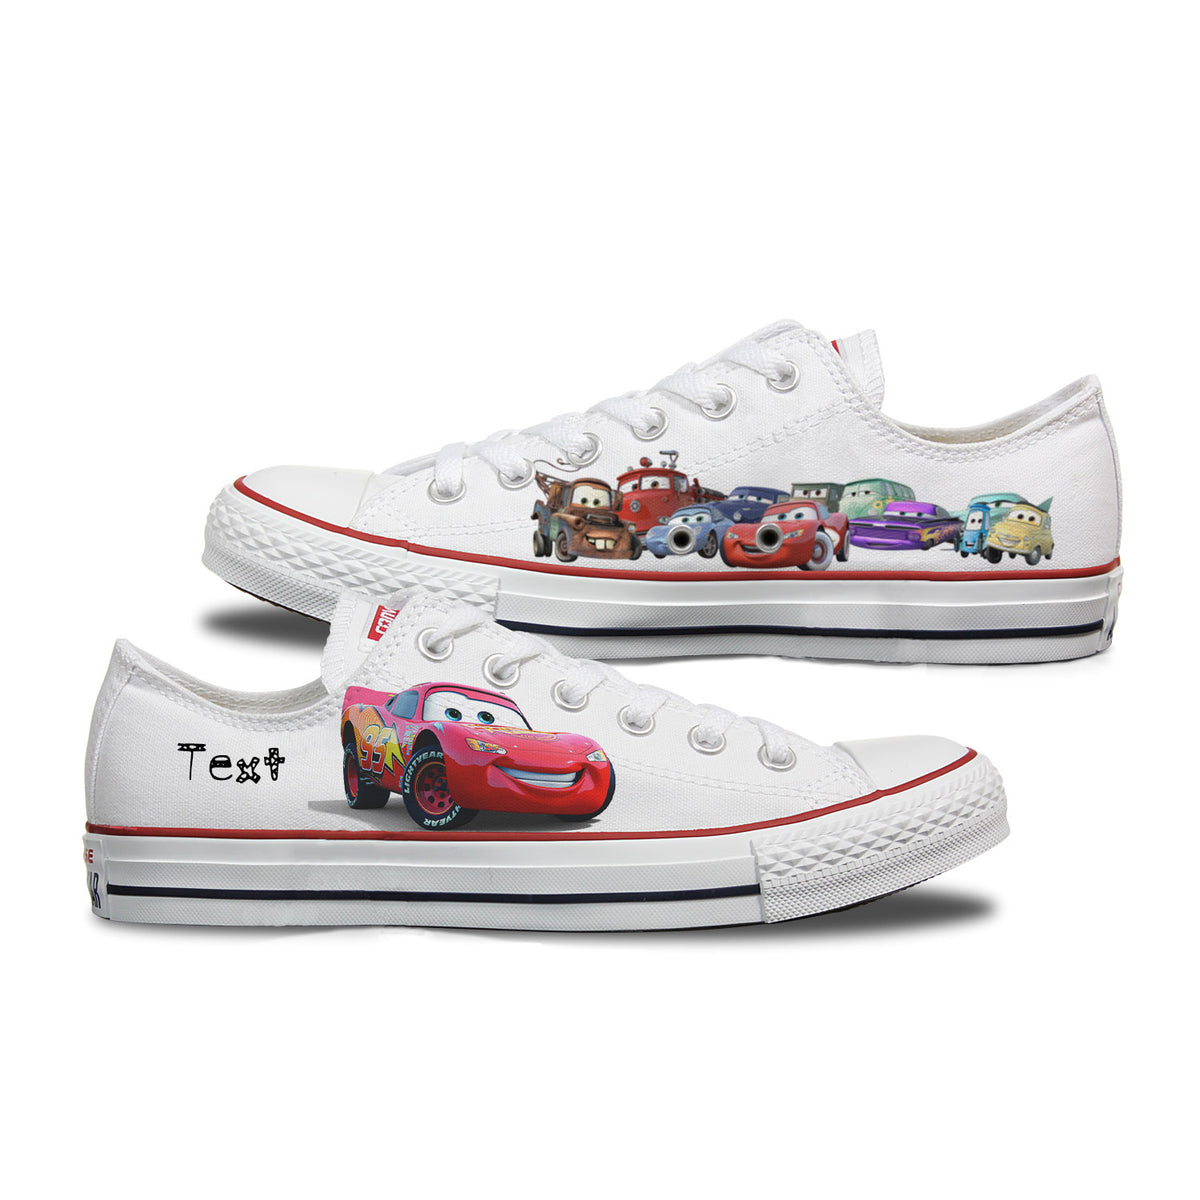 Cars Toddler Custom Converse